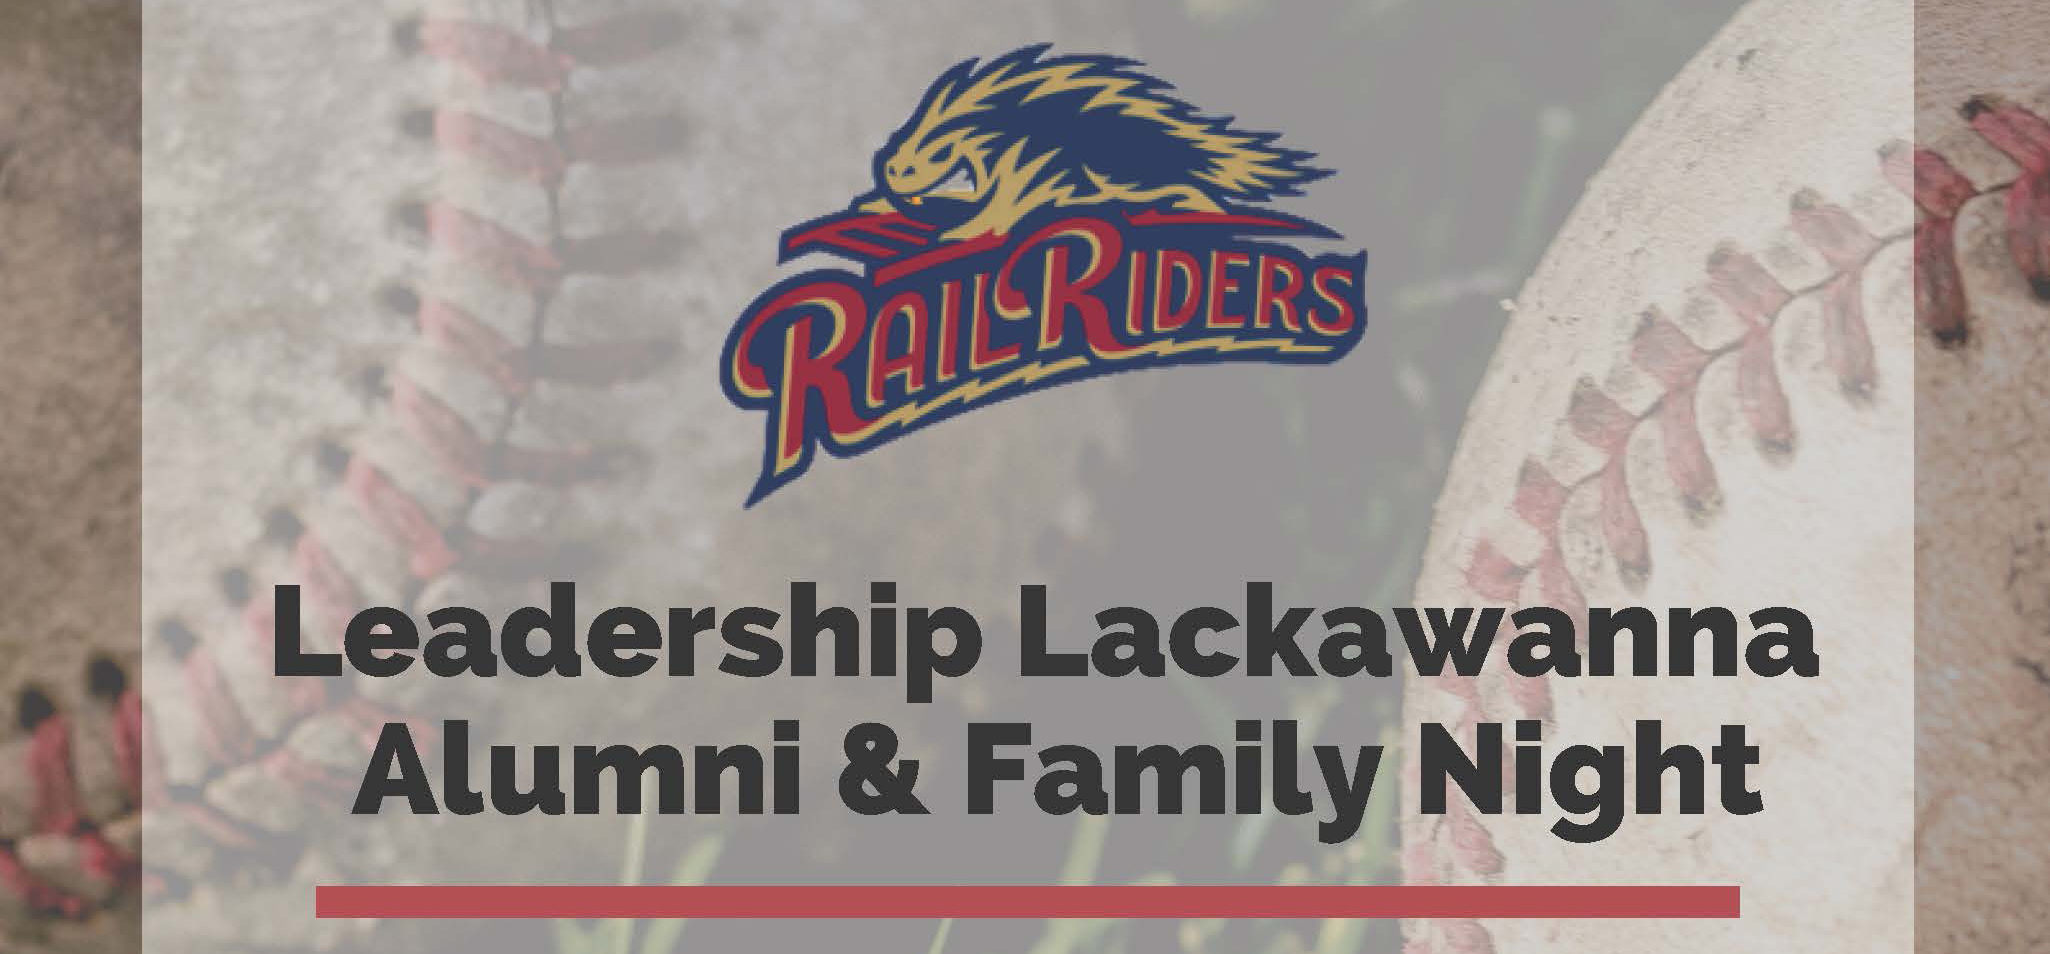 Leadership Lackawanna Alumni & Family Night at the RailRiders